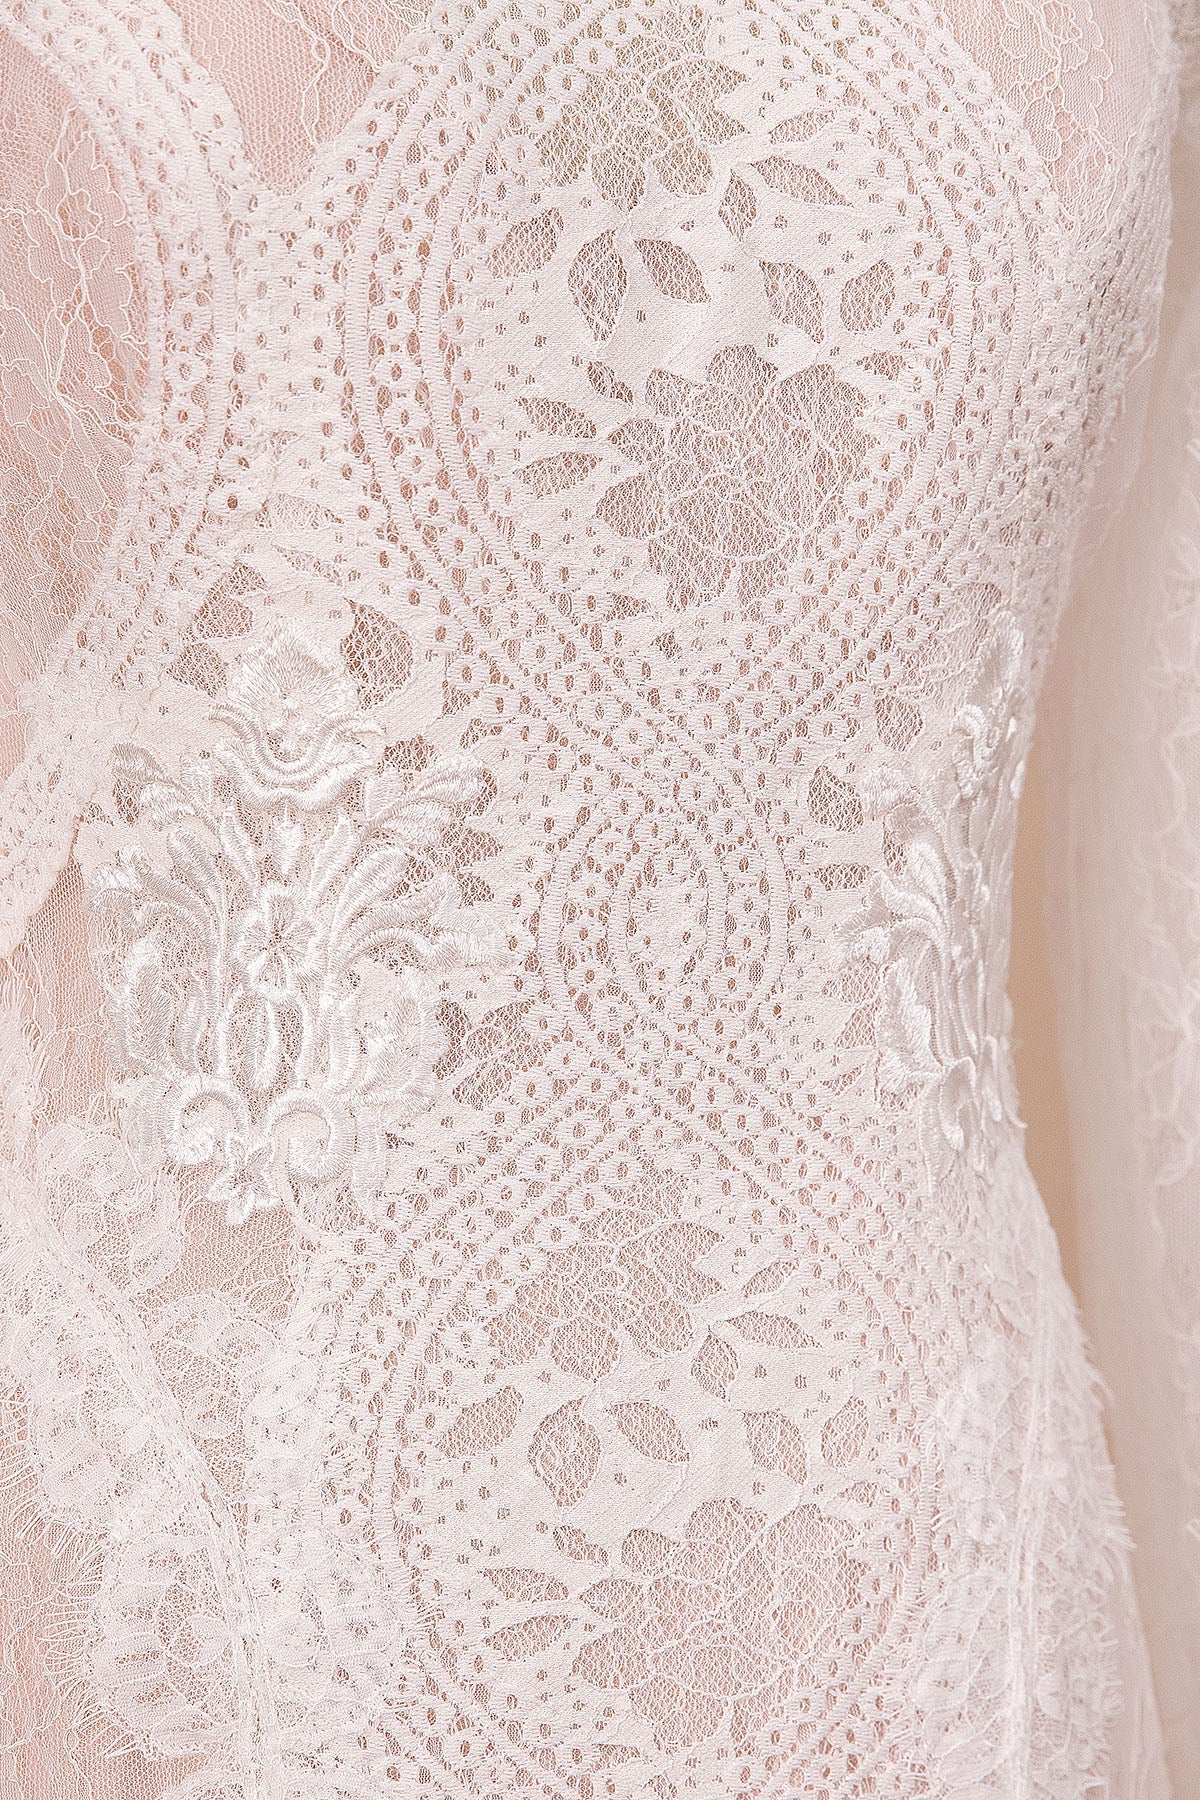 designer boho lace fall wedding dress